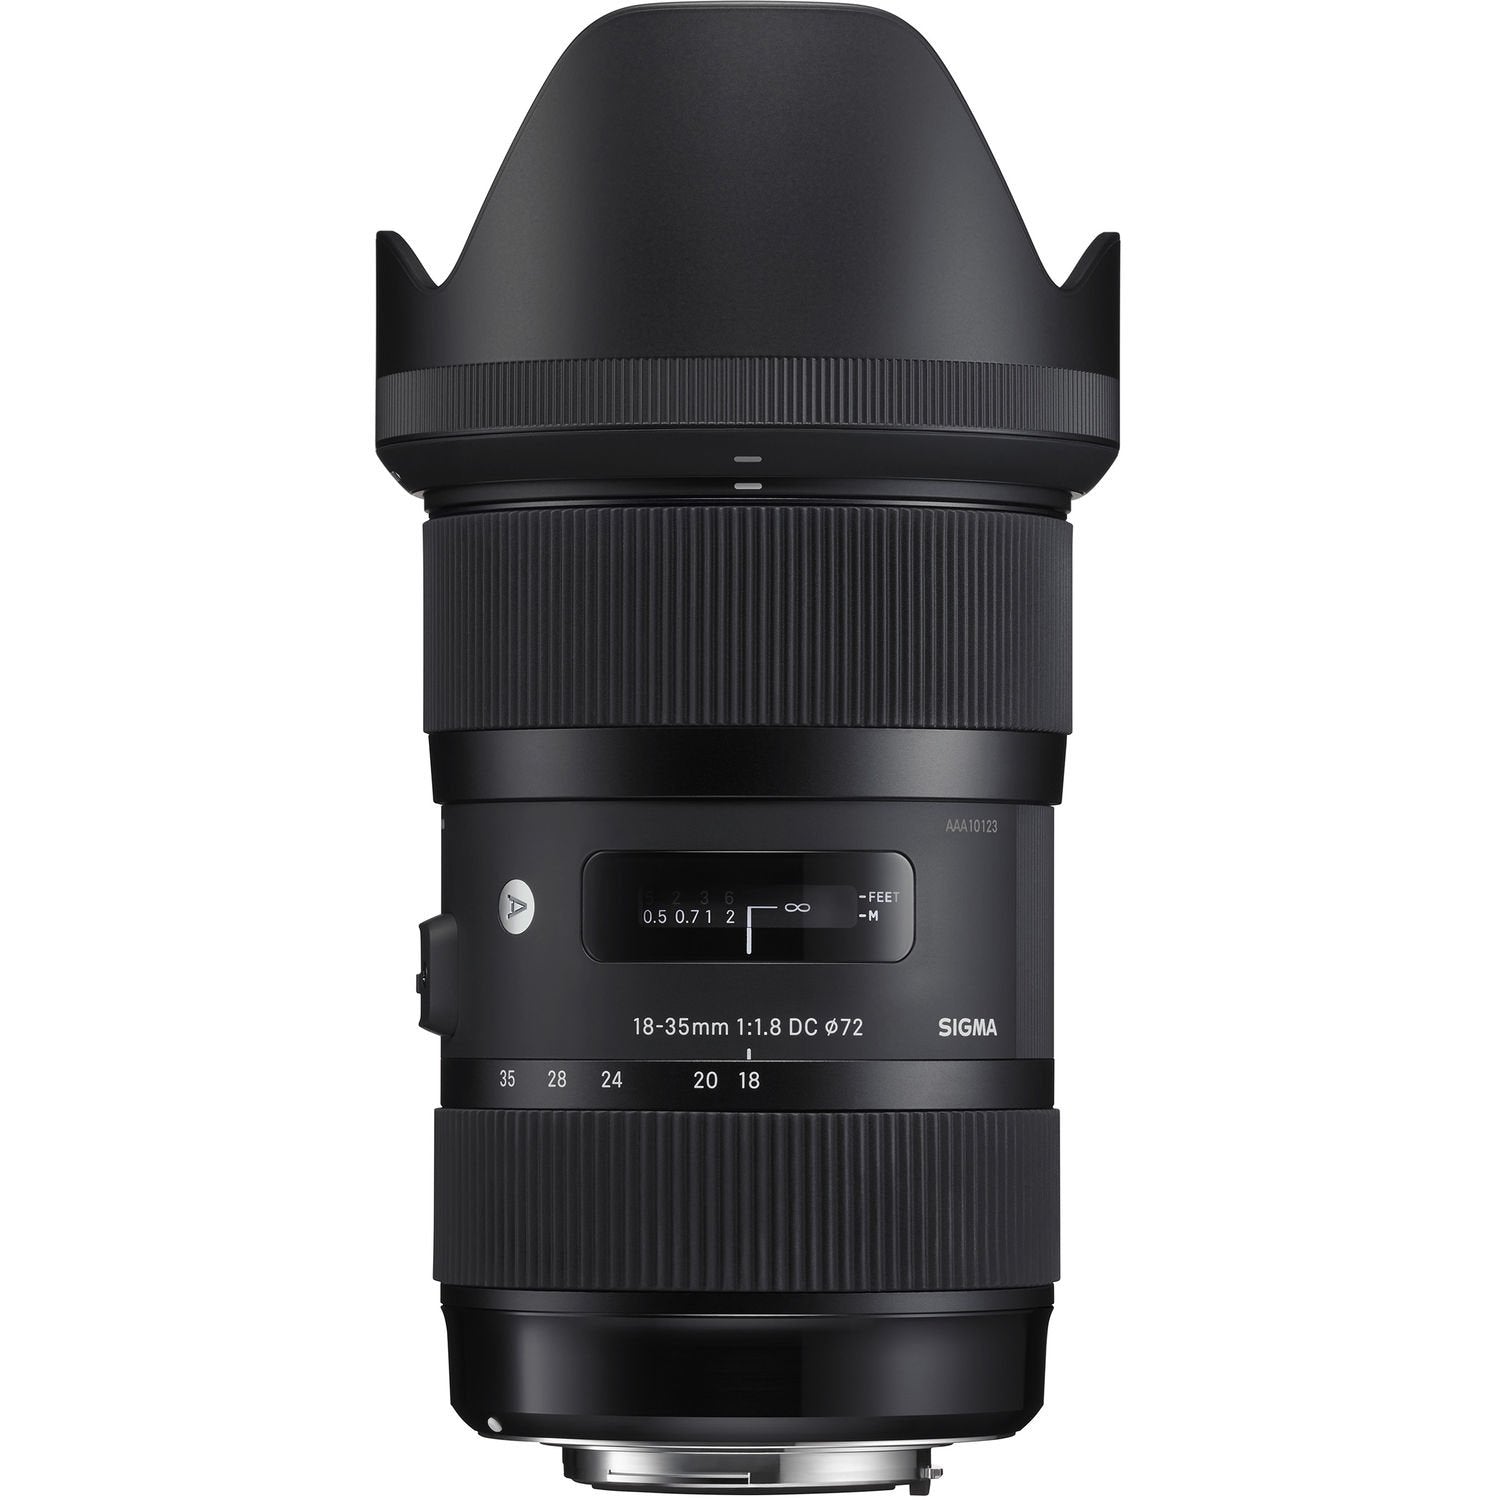 Sigma 18-35mm f/1.8 DC HSM Art Lens for Canon # 210-101 + 72mm 3 Piece Filter Kit + 72mm Close Up Kit Bundle